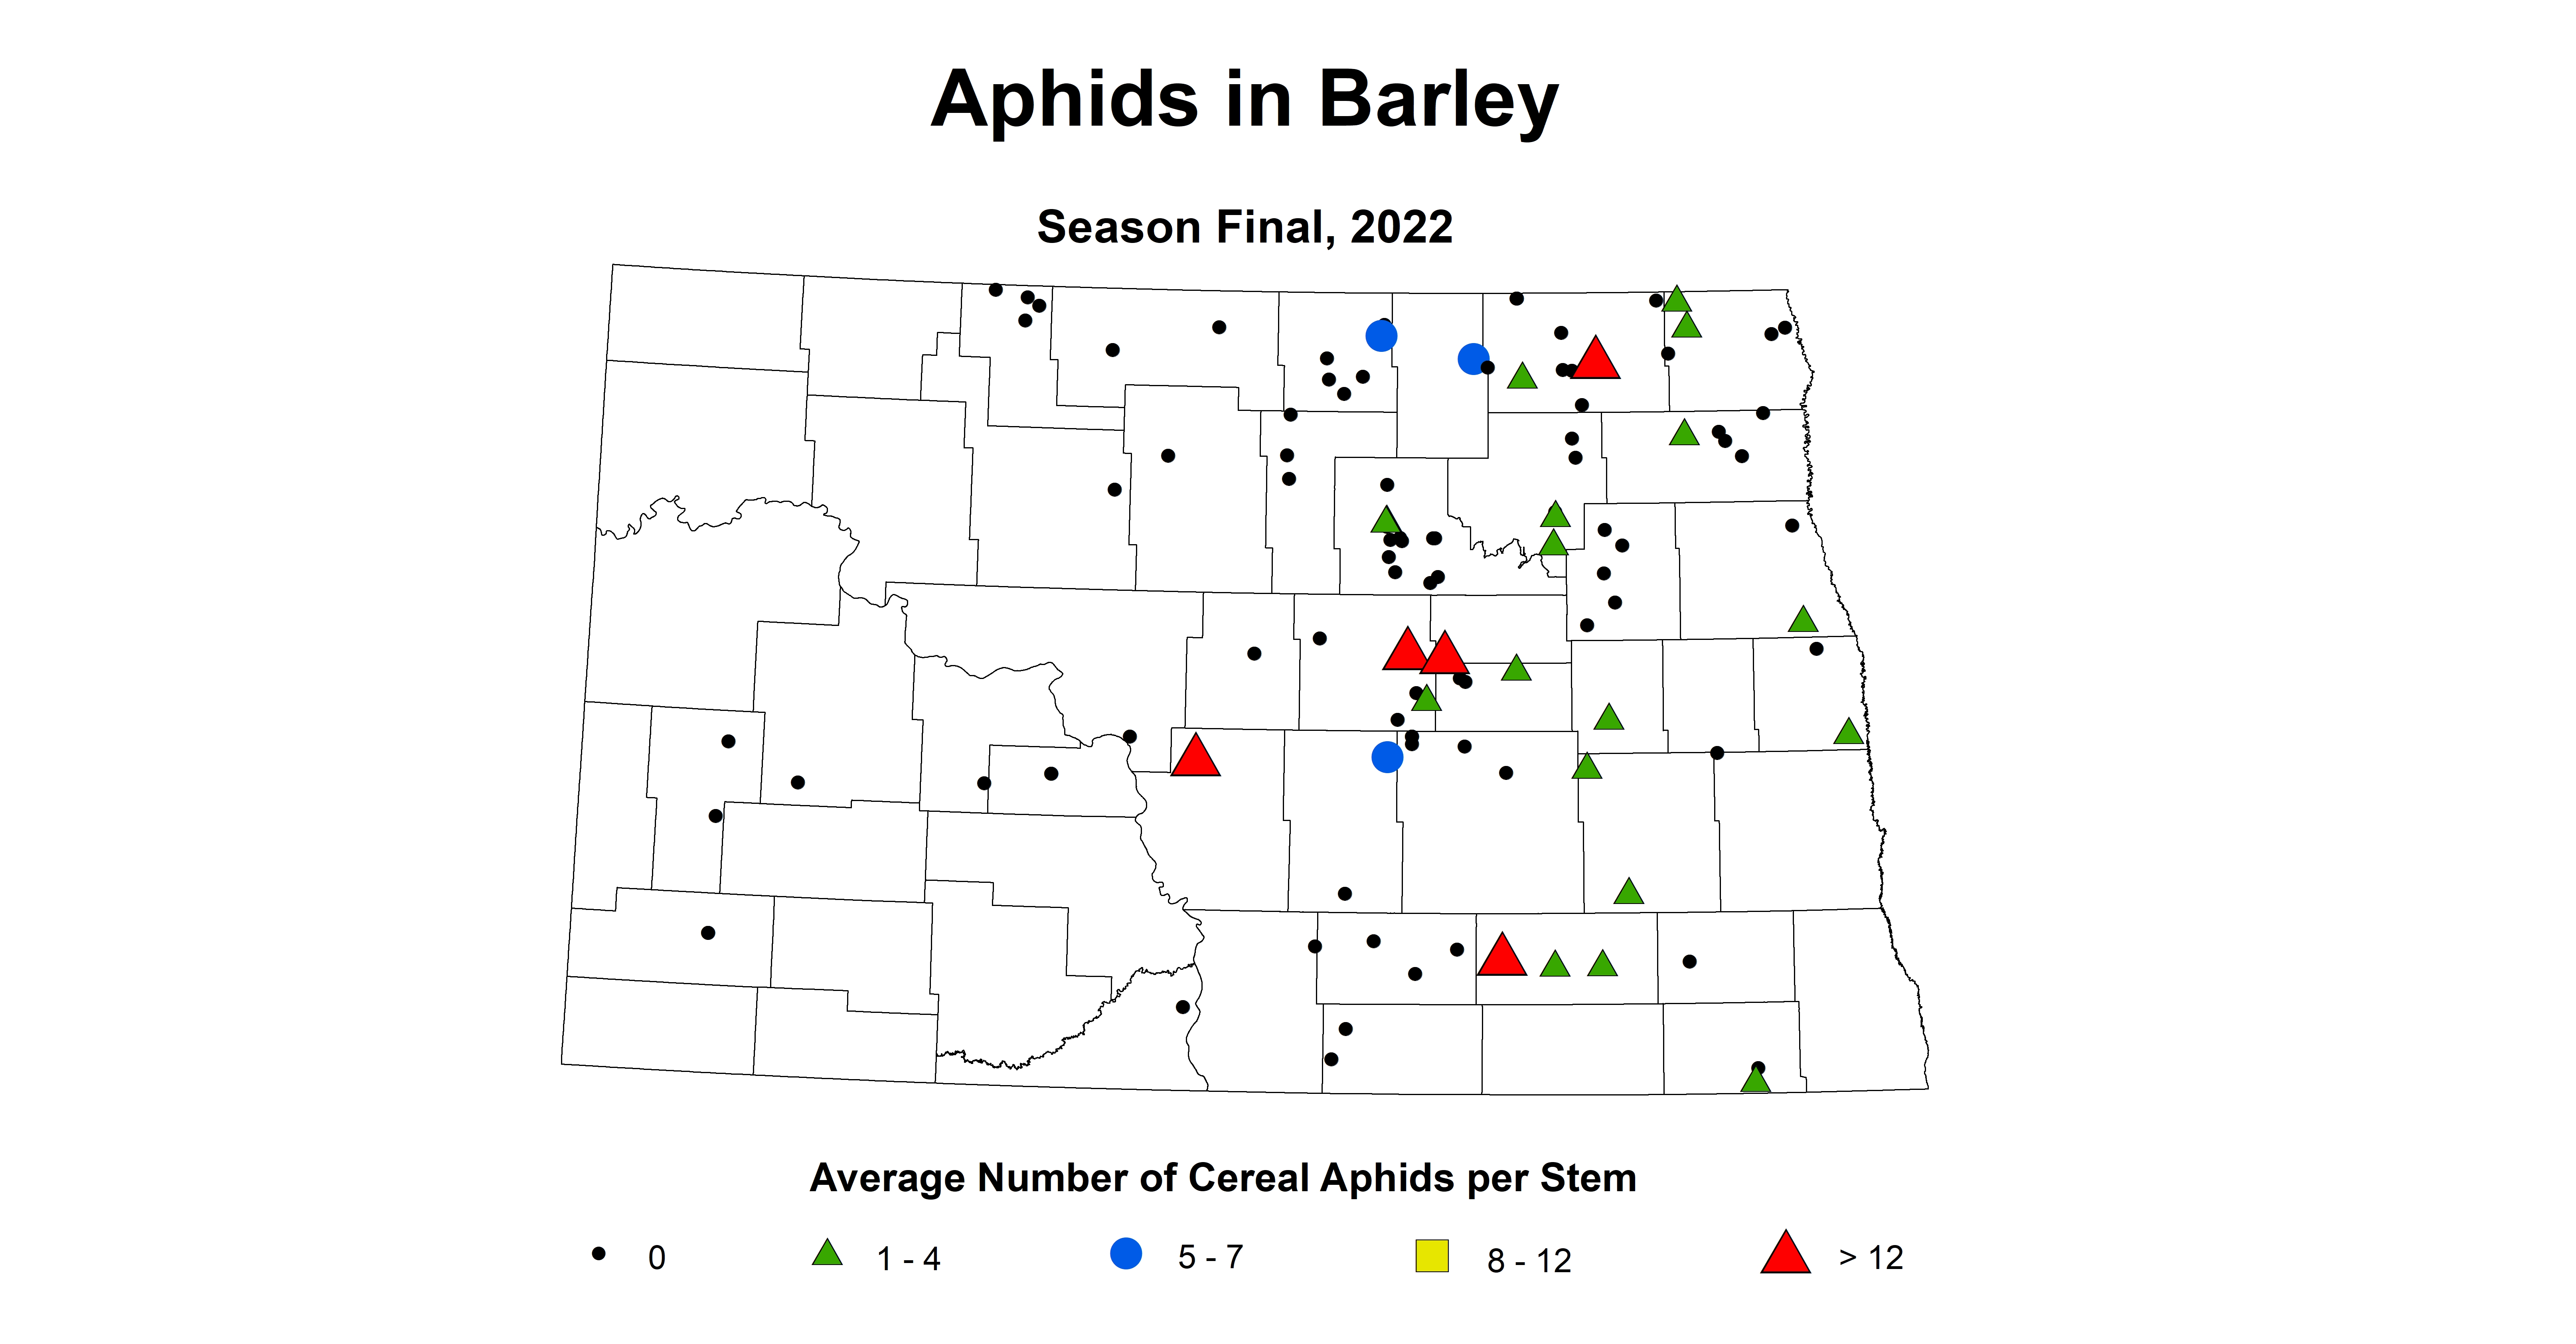 barley aphids 2022 season final